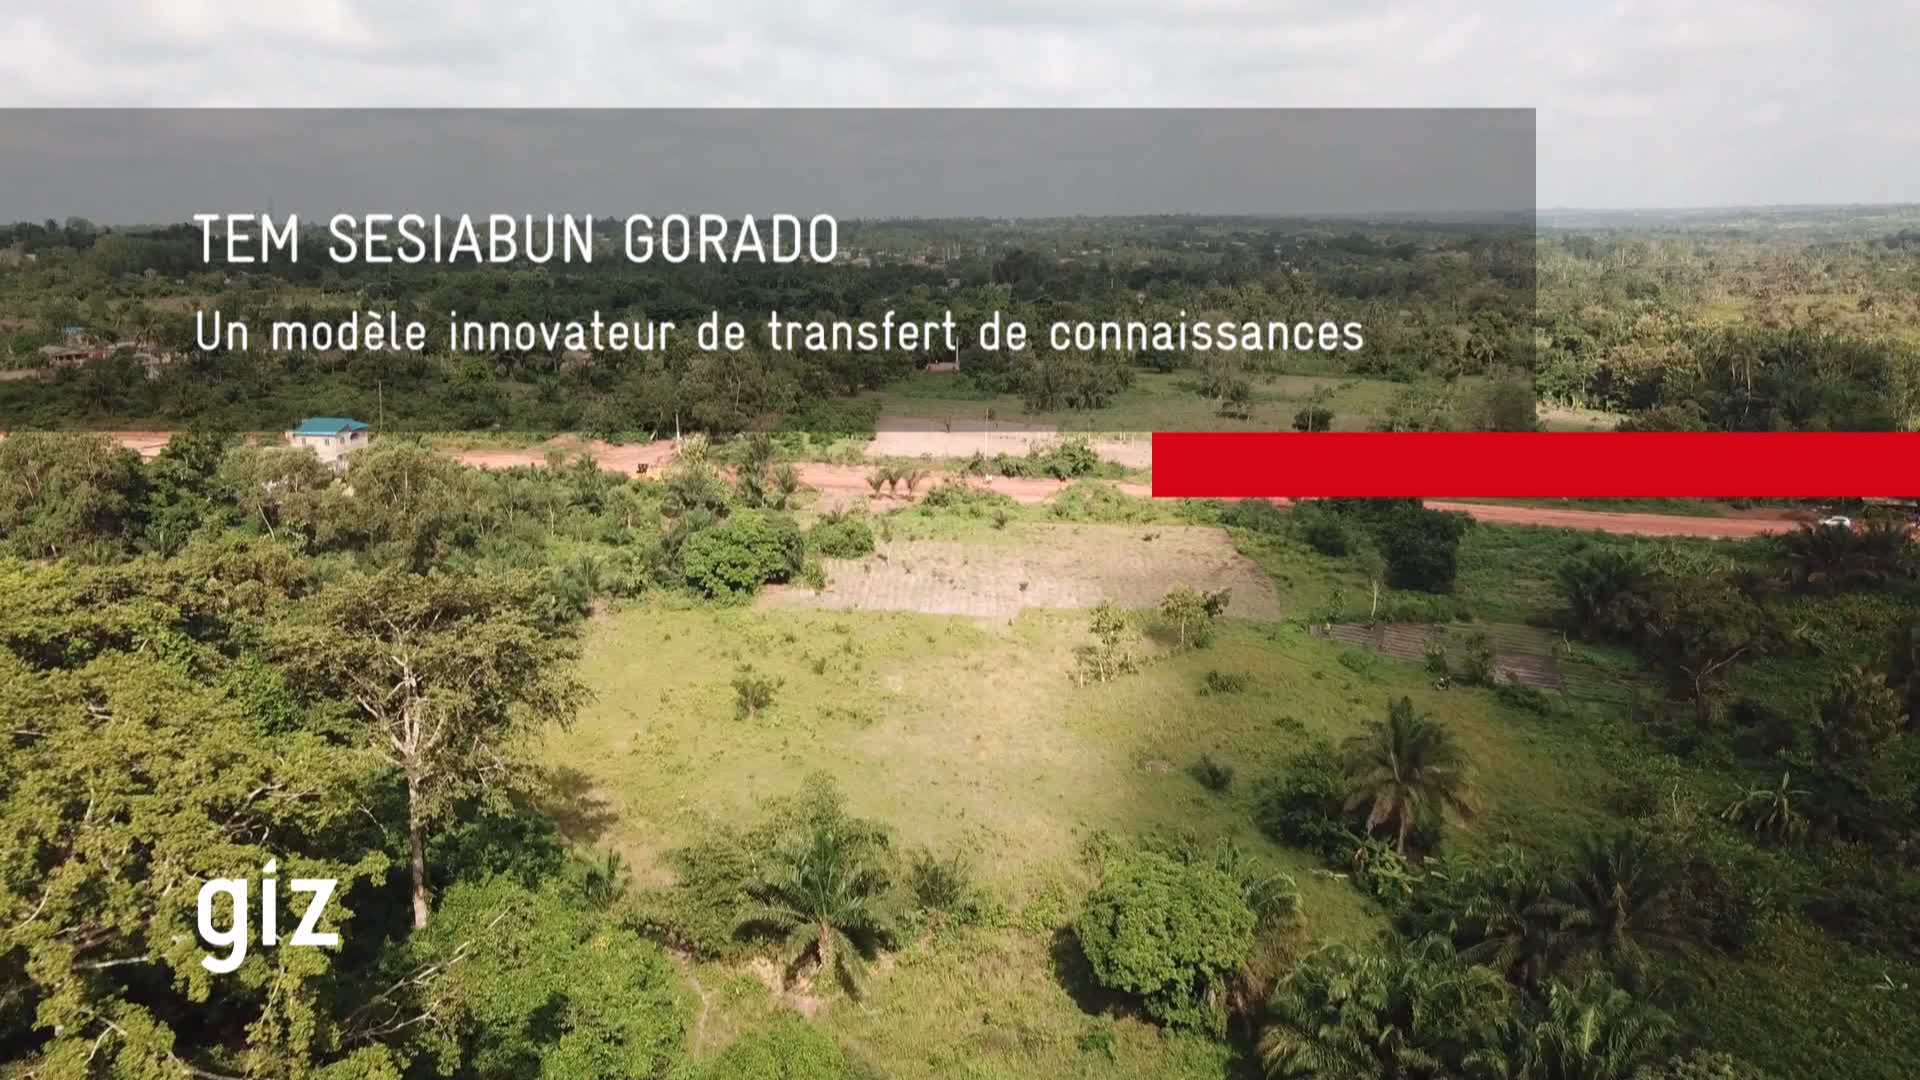 Tem Sesiabun Gorado - Un modèle innovateur de transfert de connaissances